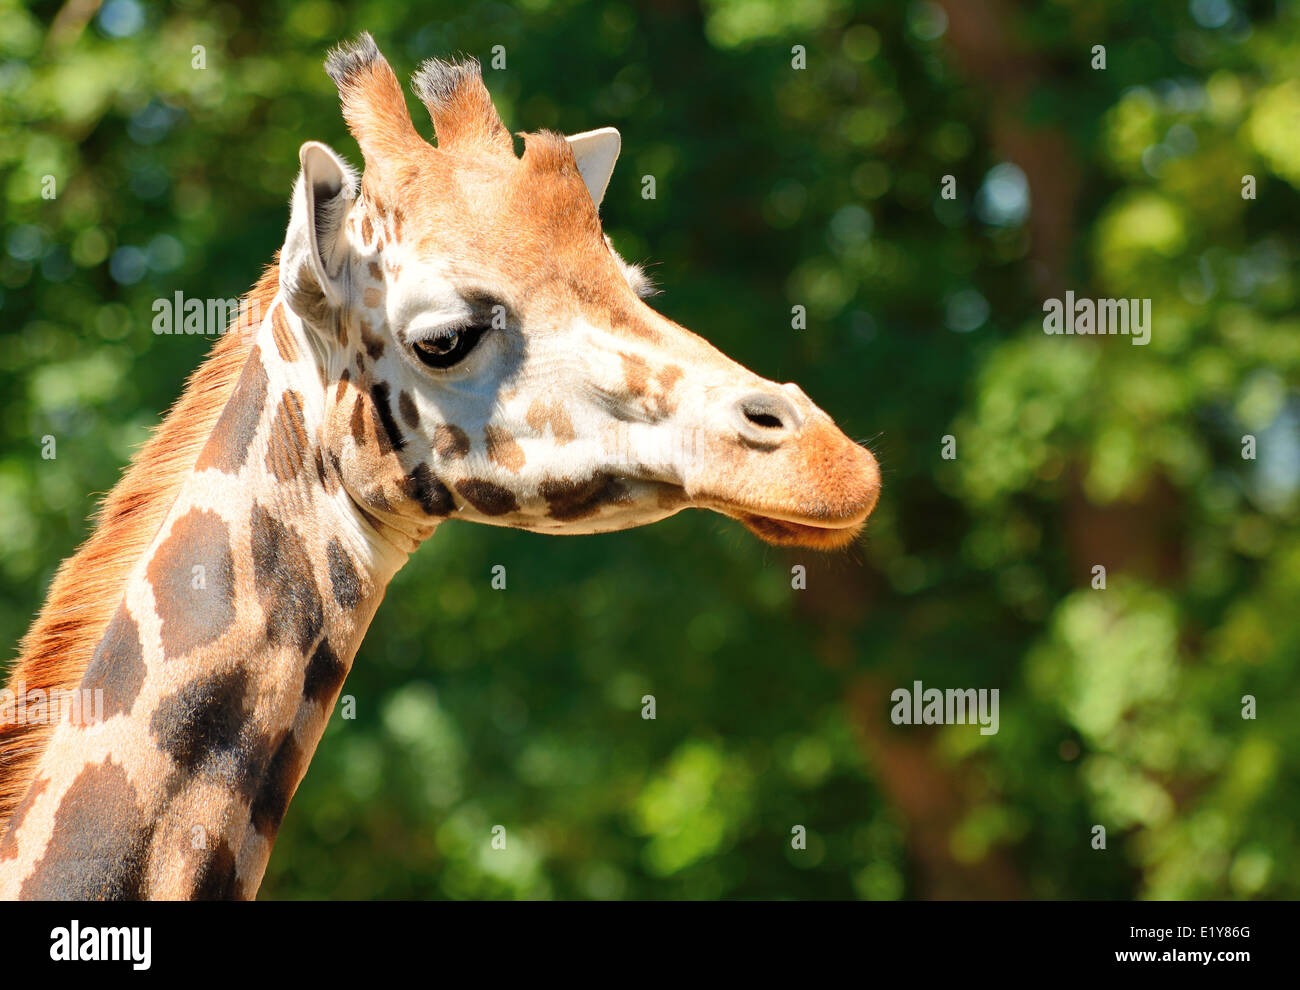 Closeup shot of the cute giraffe head. Stock Photo